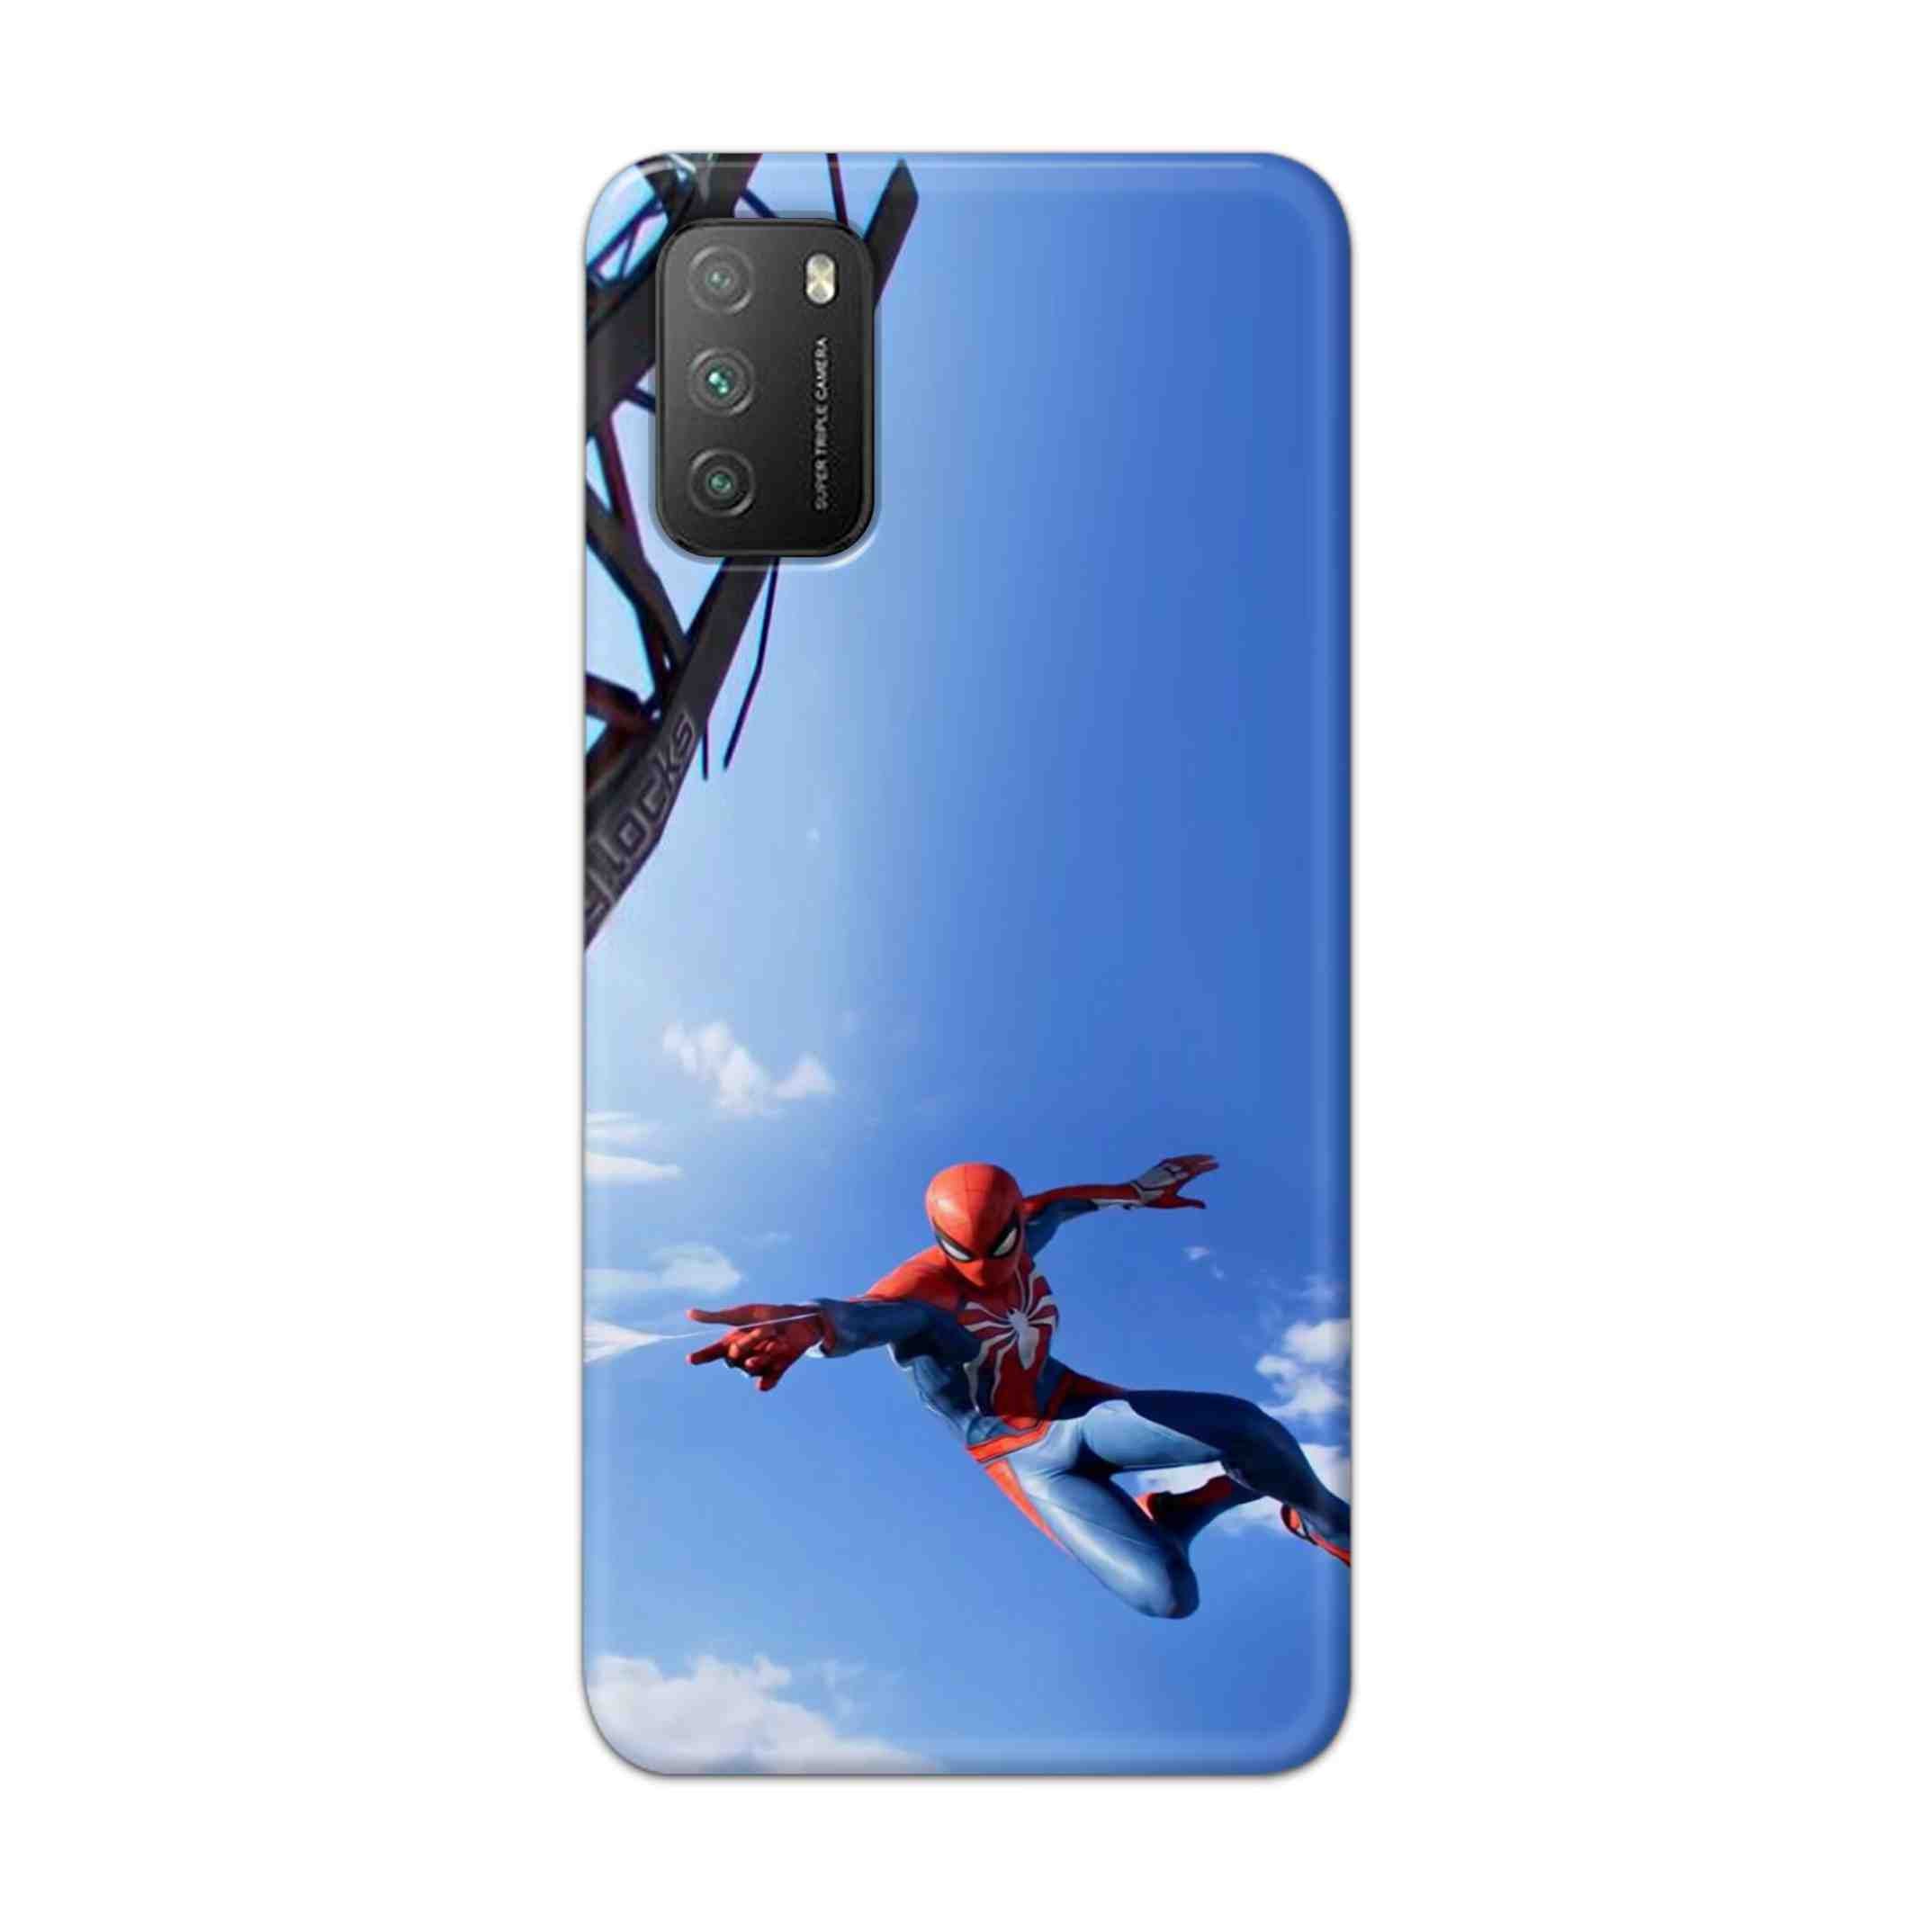 Buy Marvel Studio Spiderman Hard Back Mobile Phone Case Cover For Poco M3 Online